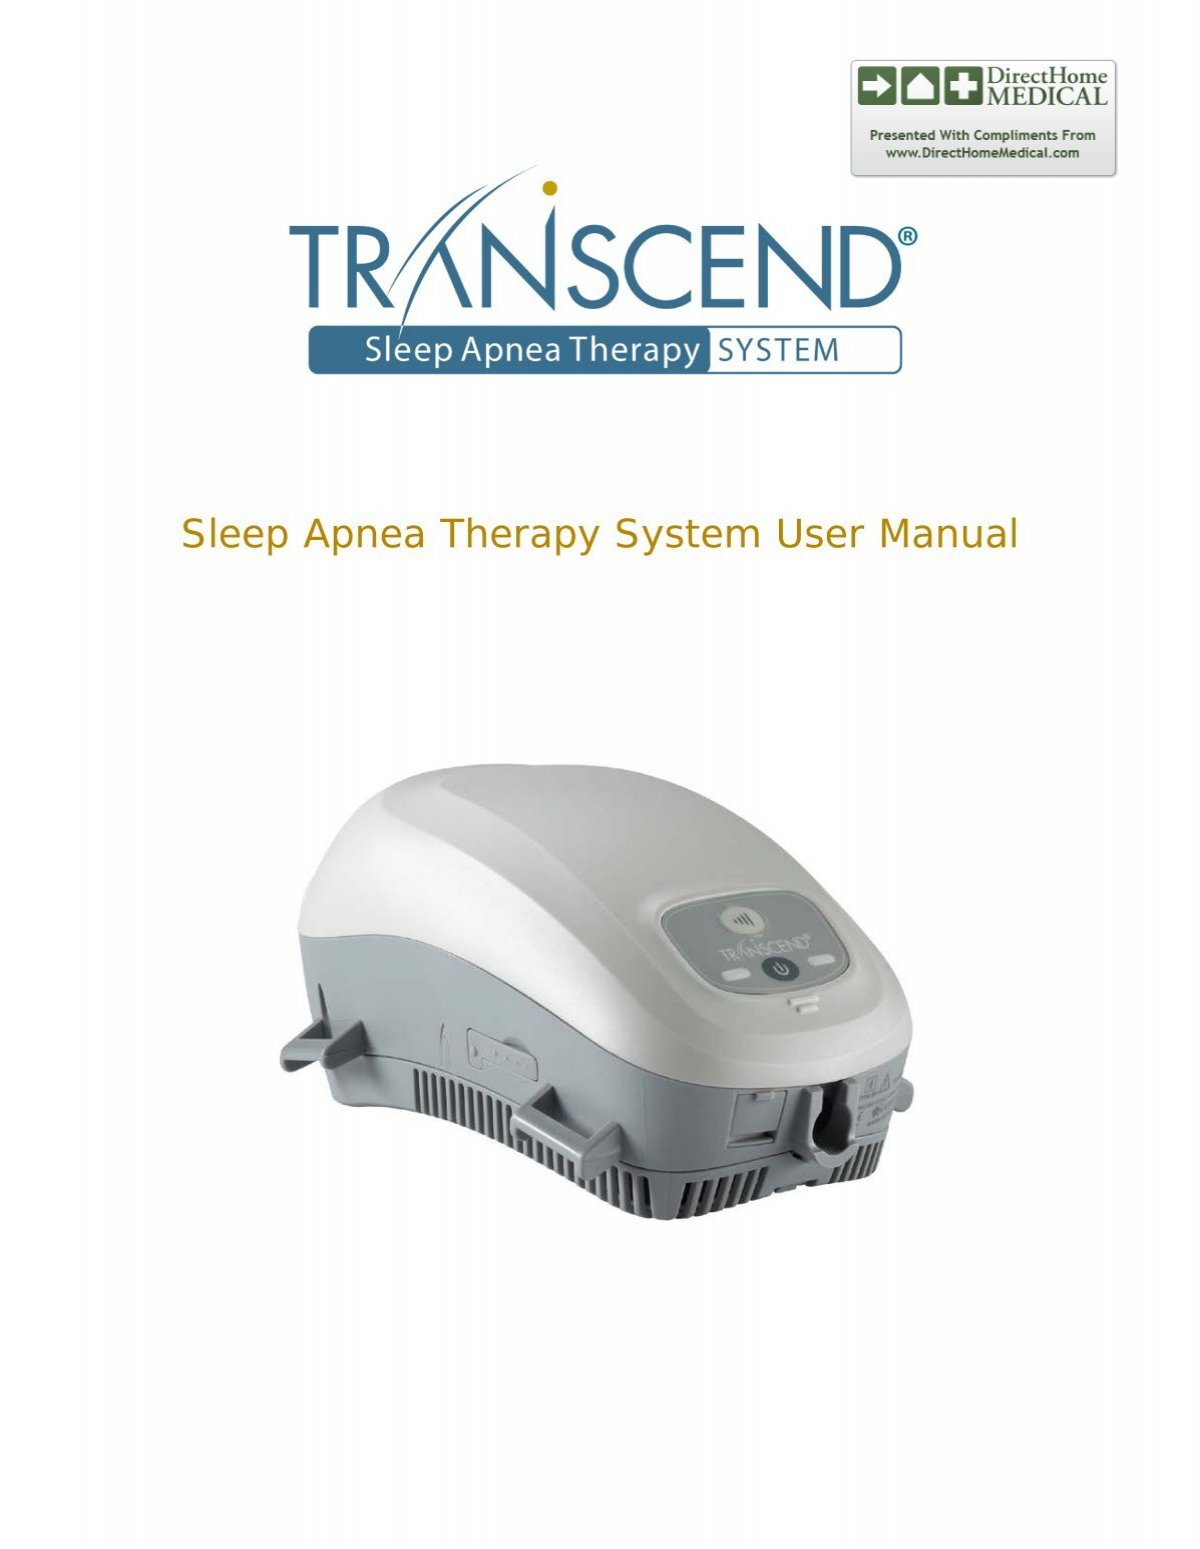 Transcend Cpap User Manual Direct Home Medical 6071